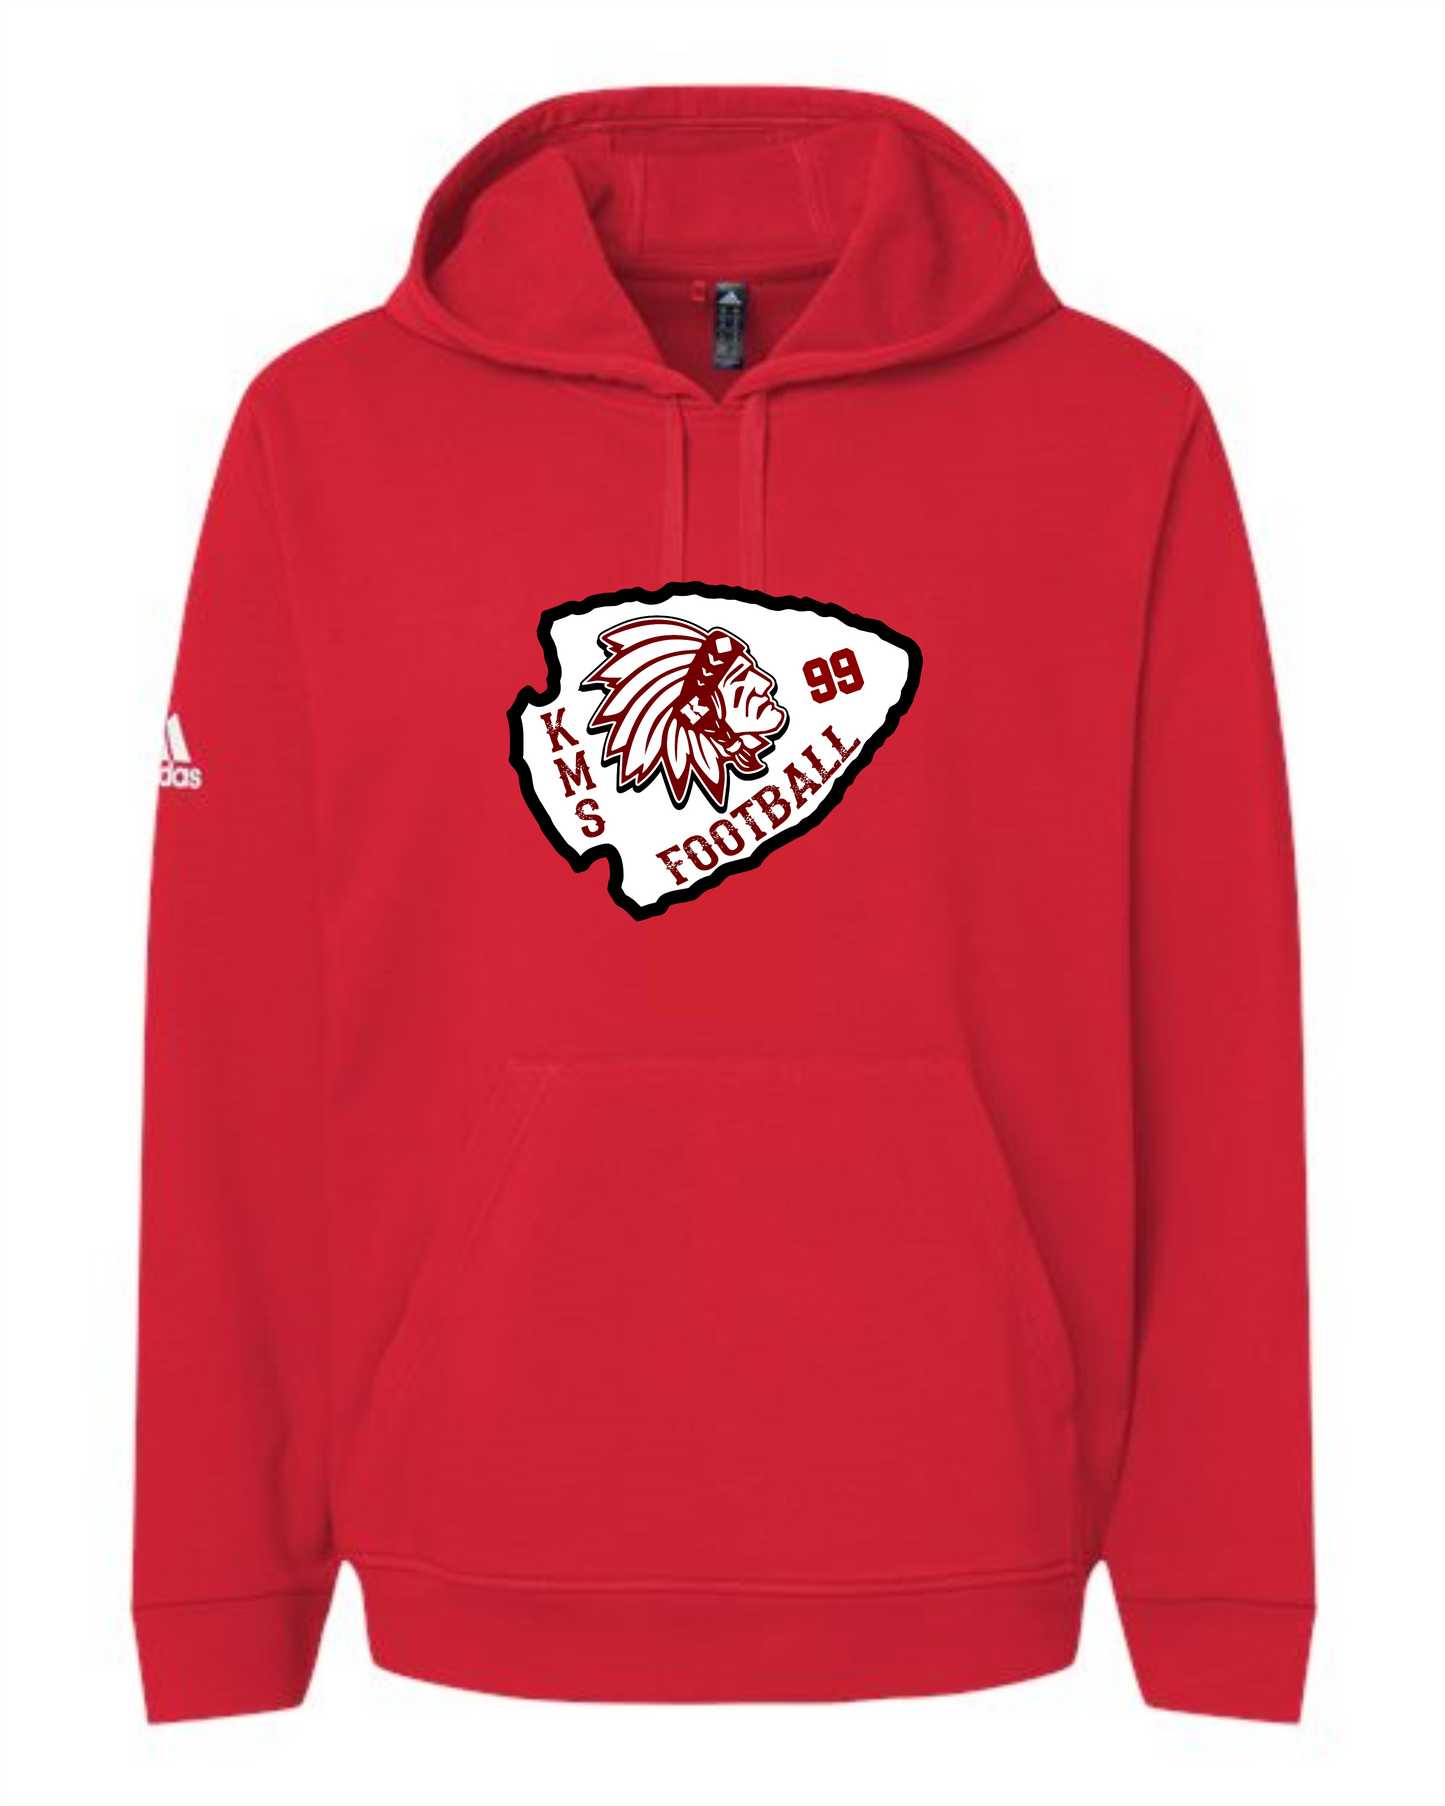 KMS Redskins Adidas Brand FOOTBALL Hoodie w/ Player Number - Red